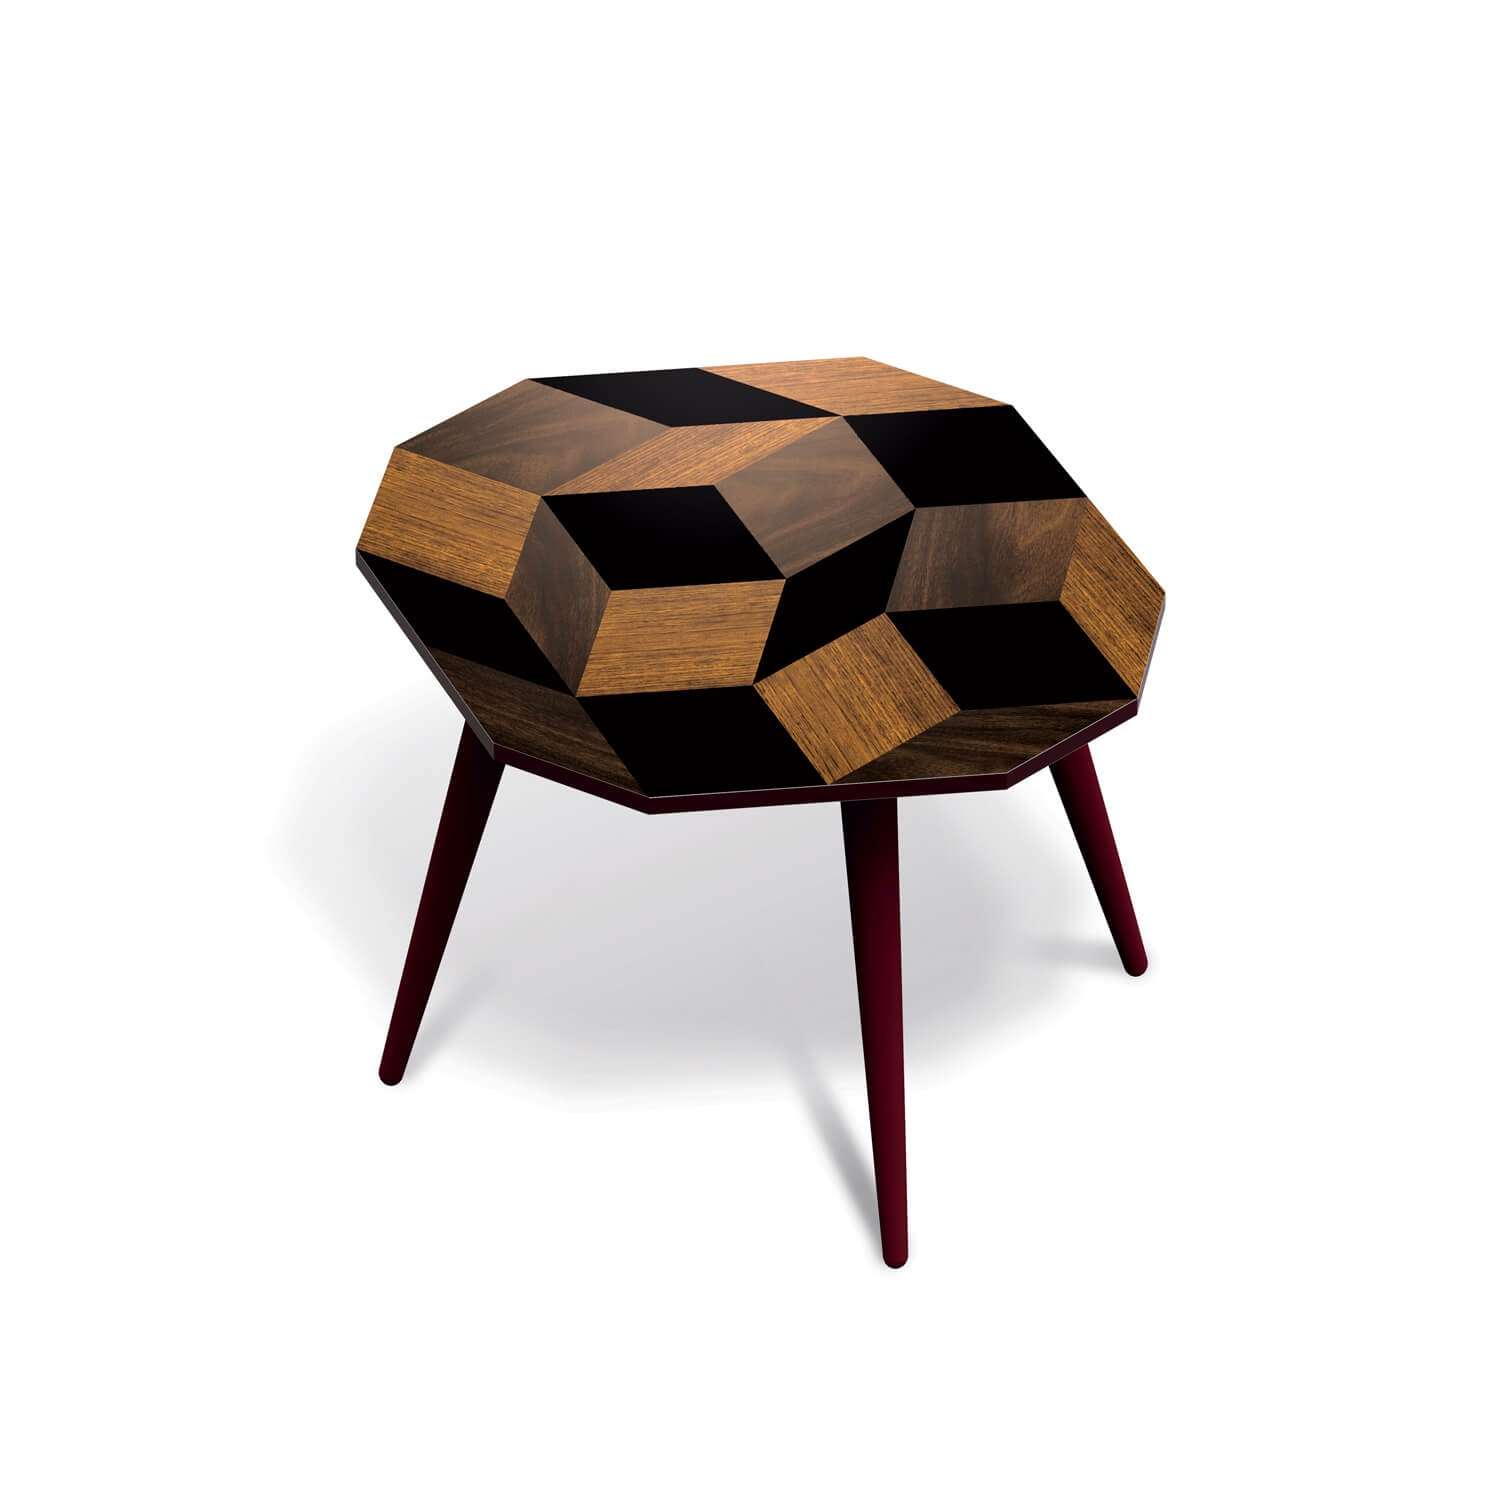 Table d'appoint Wood Medium, motif Penrose, design IchetKar édition Bazartherapy